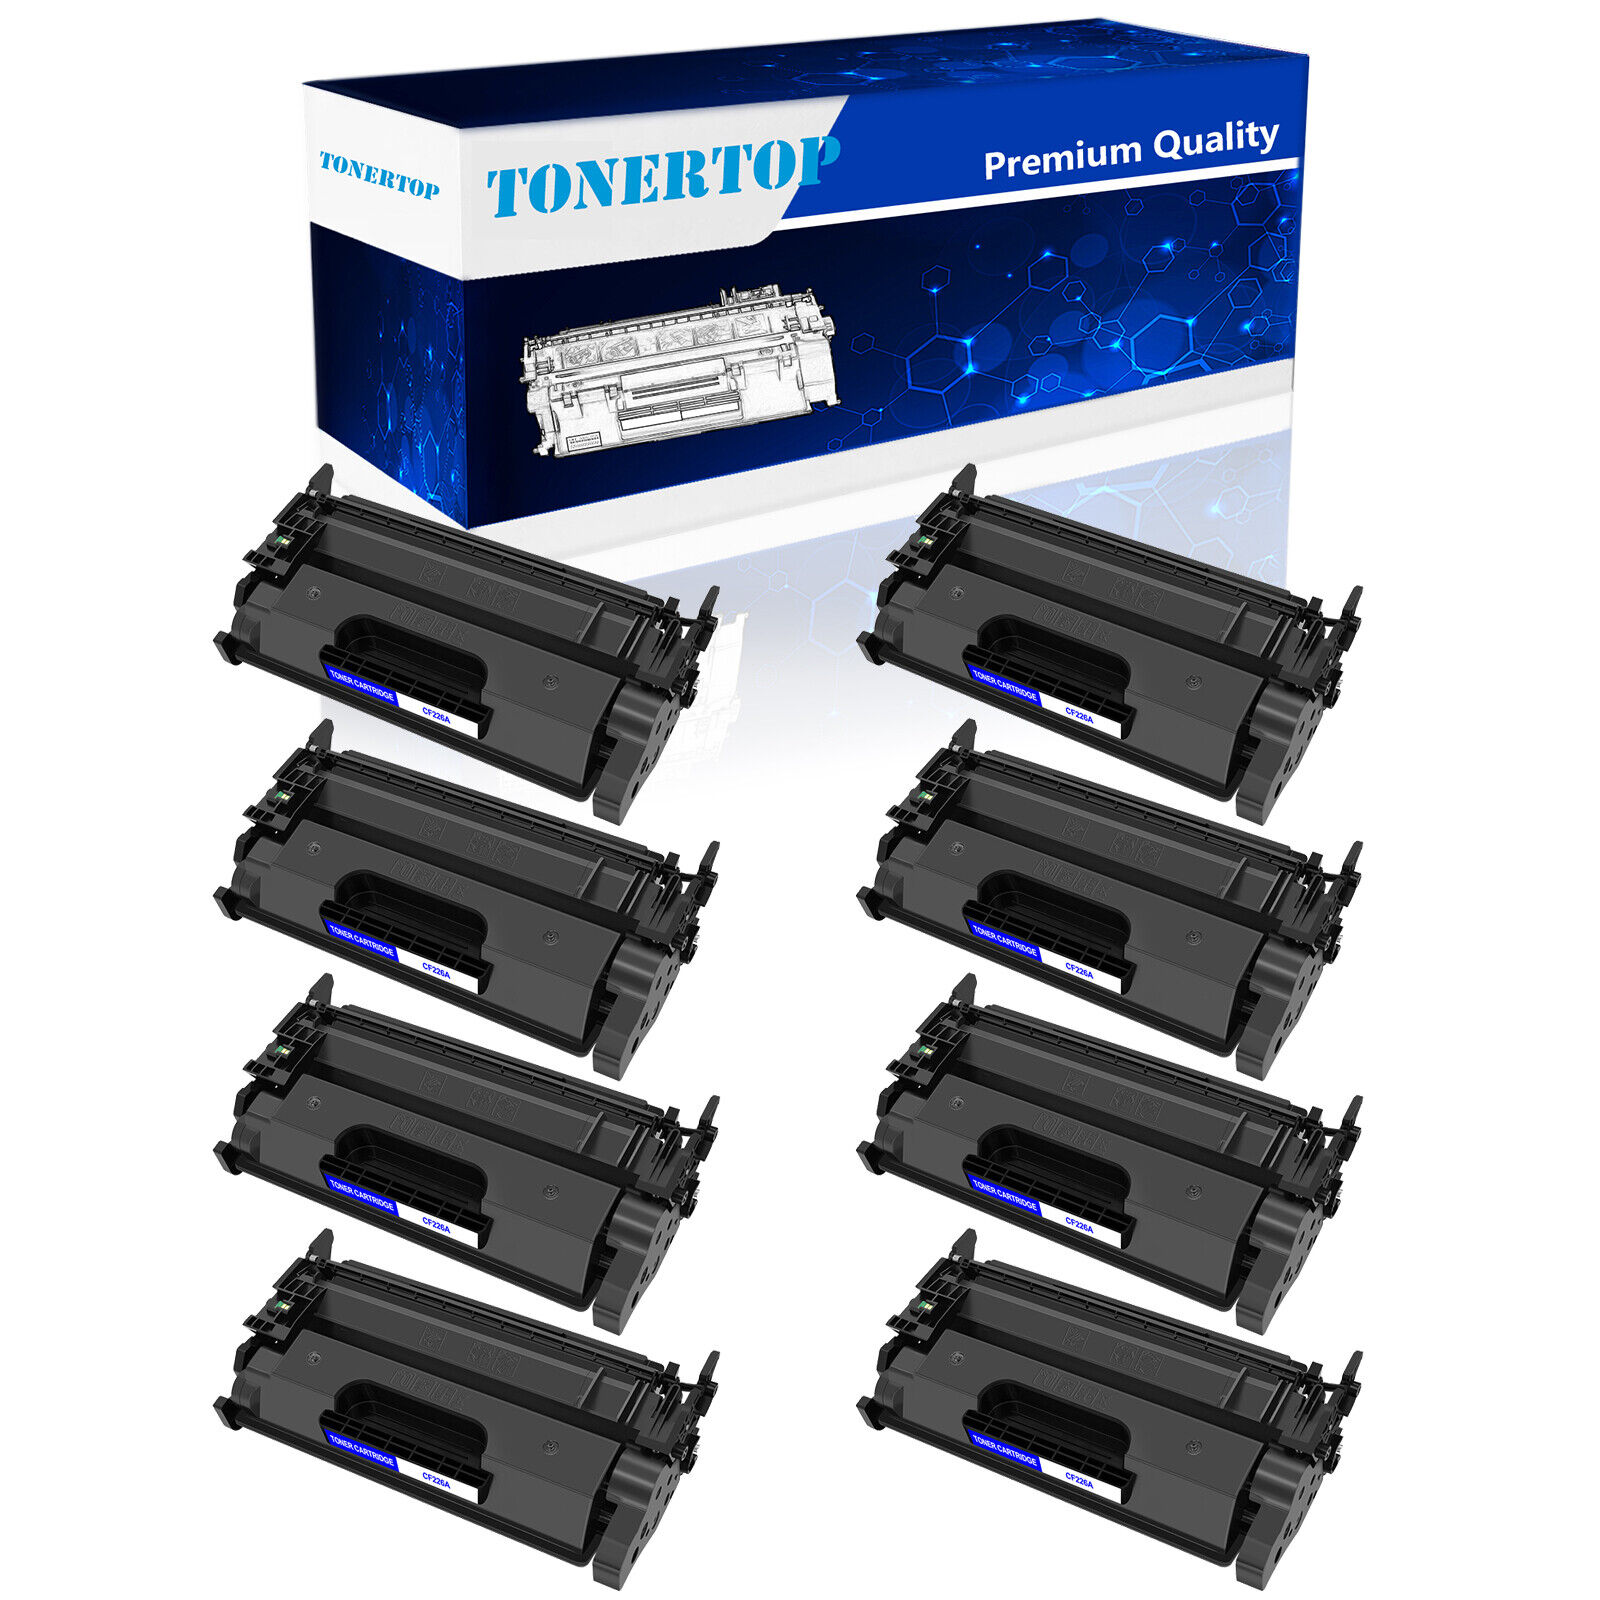 8 Pack CF226A 26A Toner Cartridge Fit for HP LaserJet Pro MFP M426 M426fdn M402n